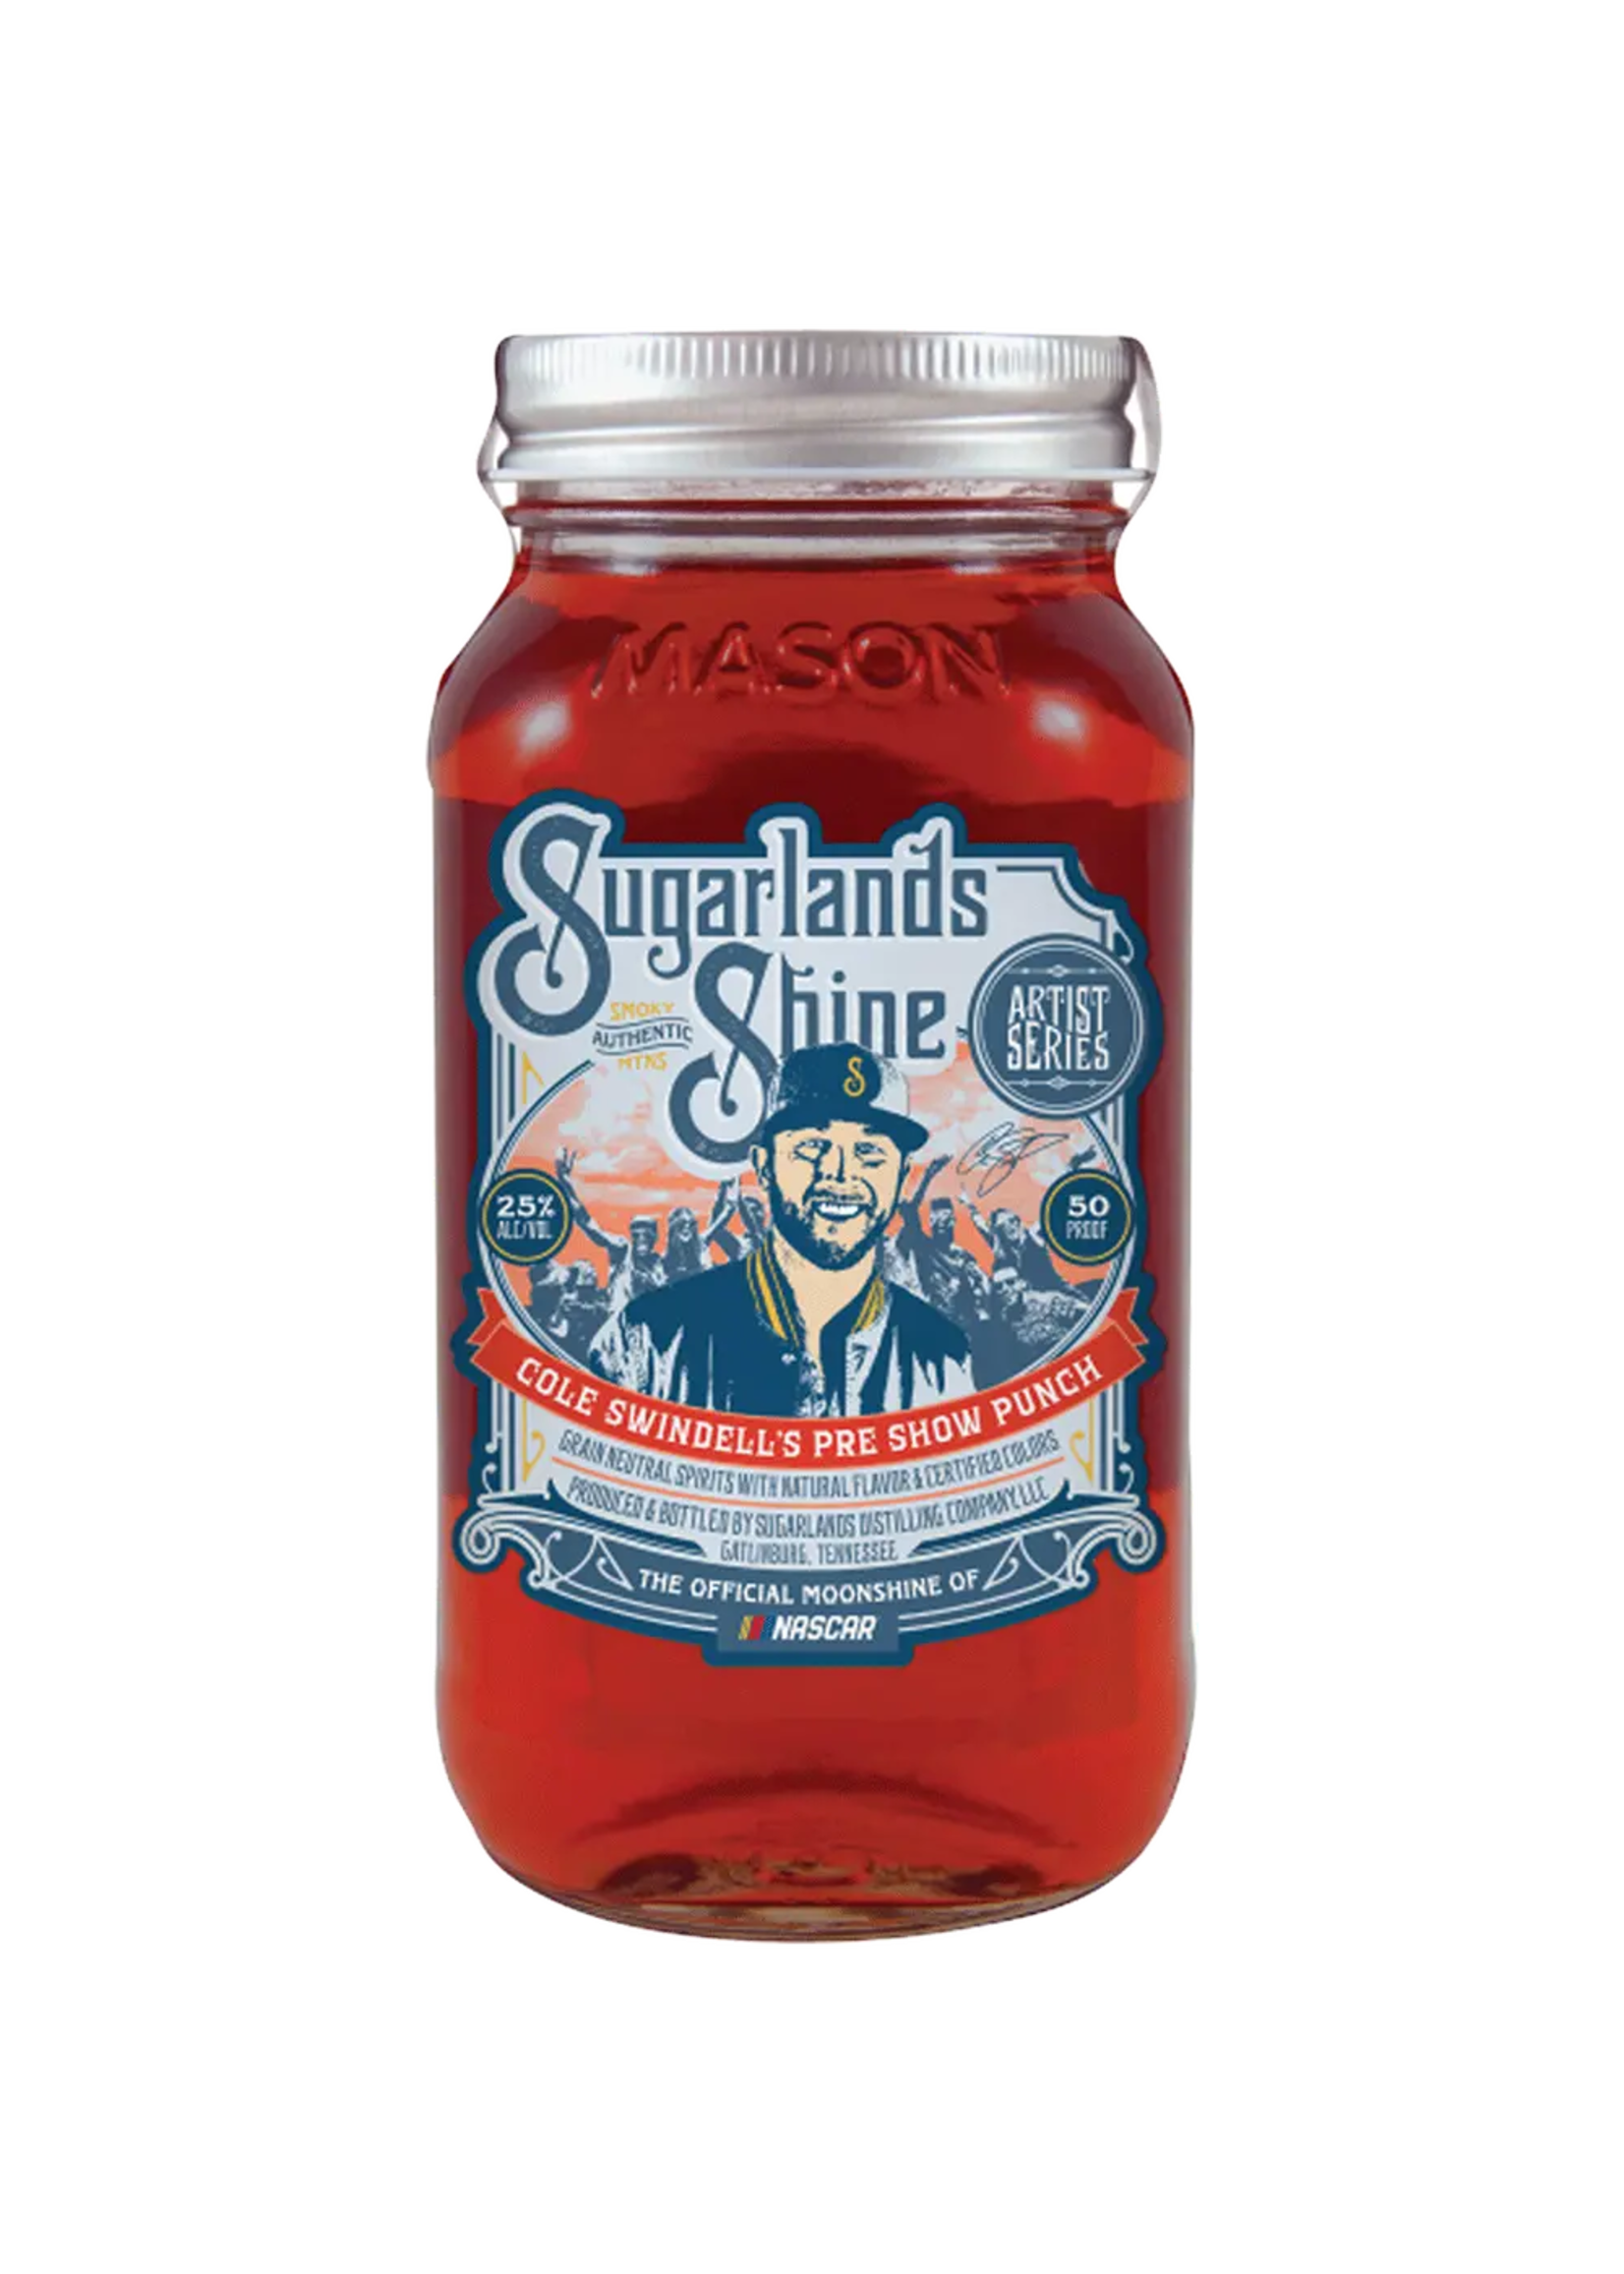 Sugarlands Moonshine & Sippin Cream Sugarlands Shine Cole Swindells Pre Show Punch Moonshine 50Proof Jar 750ml